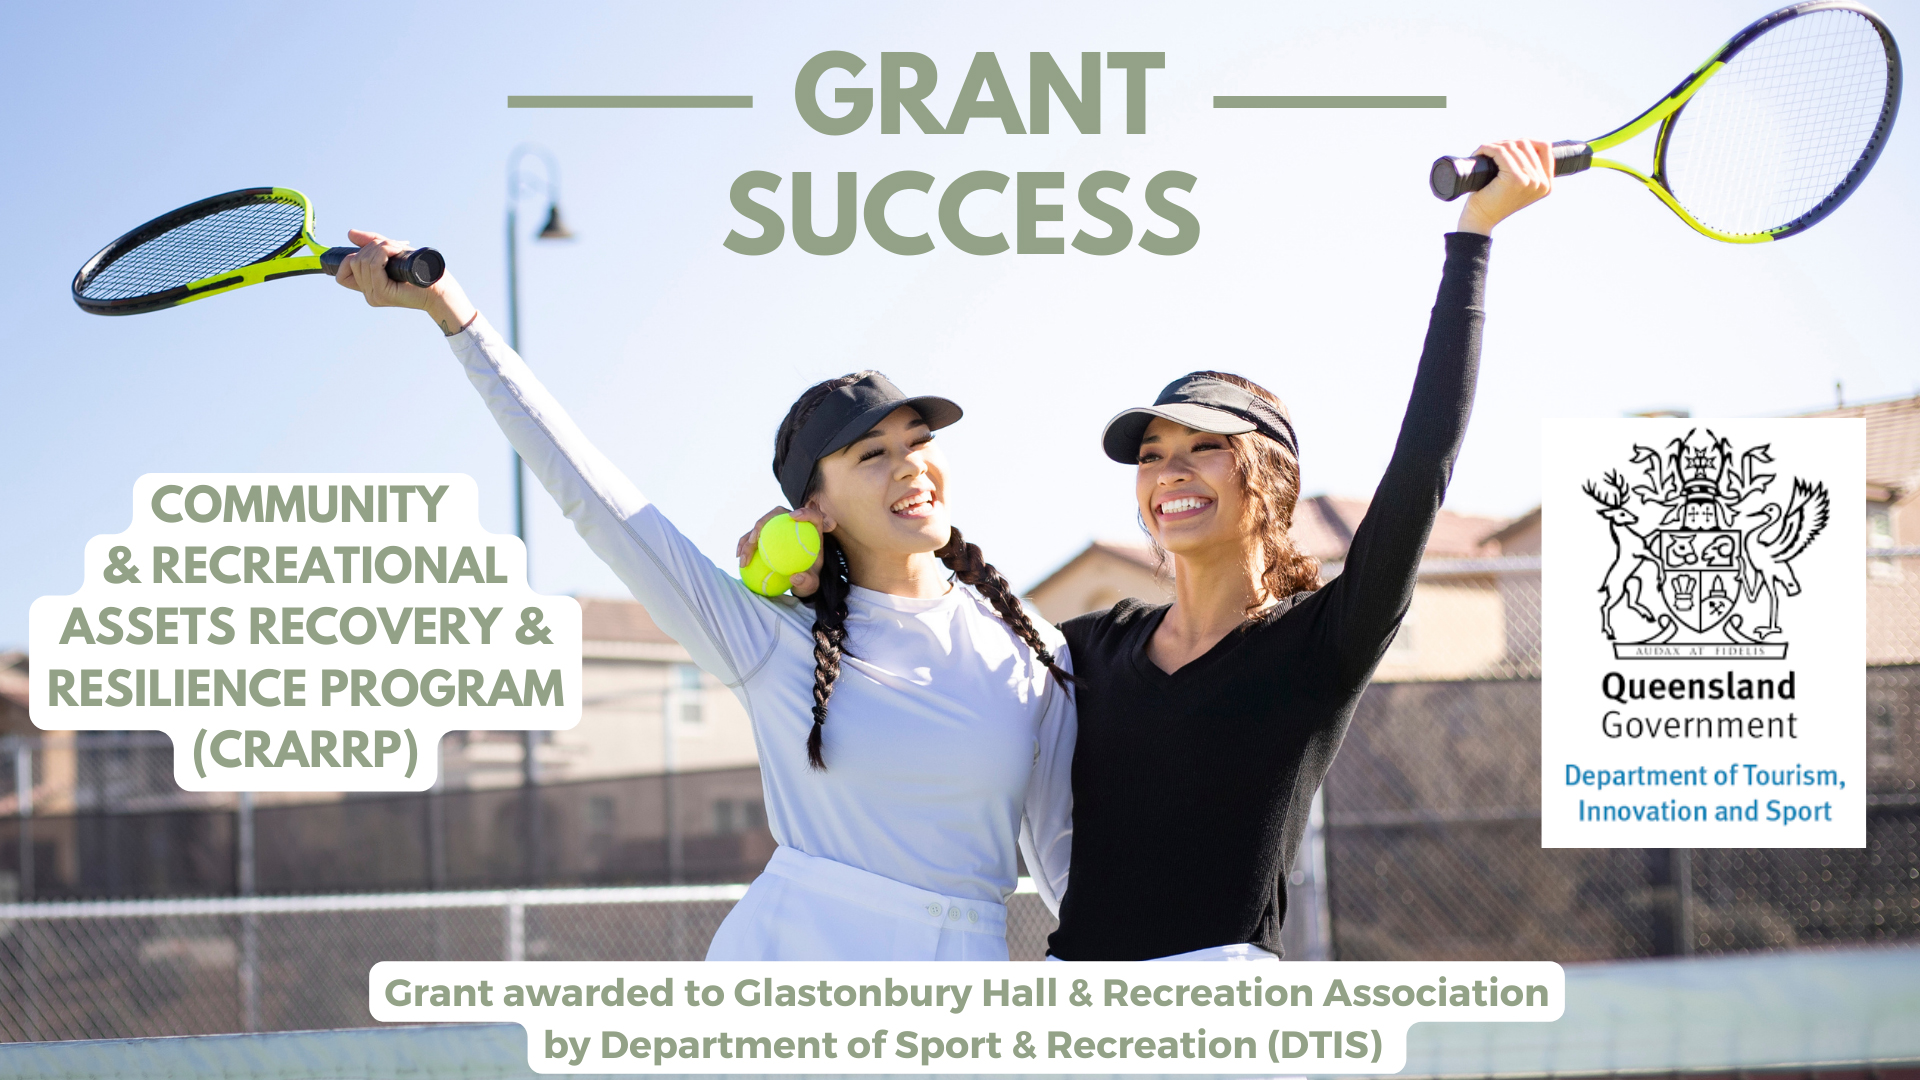 Glastonbury Hall success for Gambling Community Benefit Fund Queensland Facility Improvement Grant